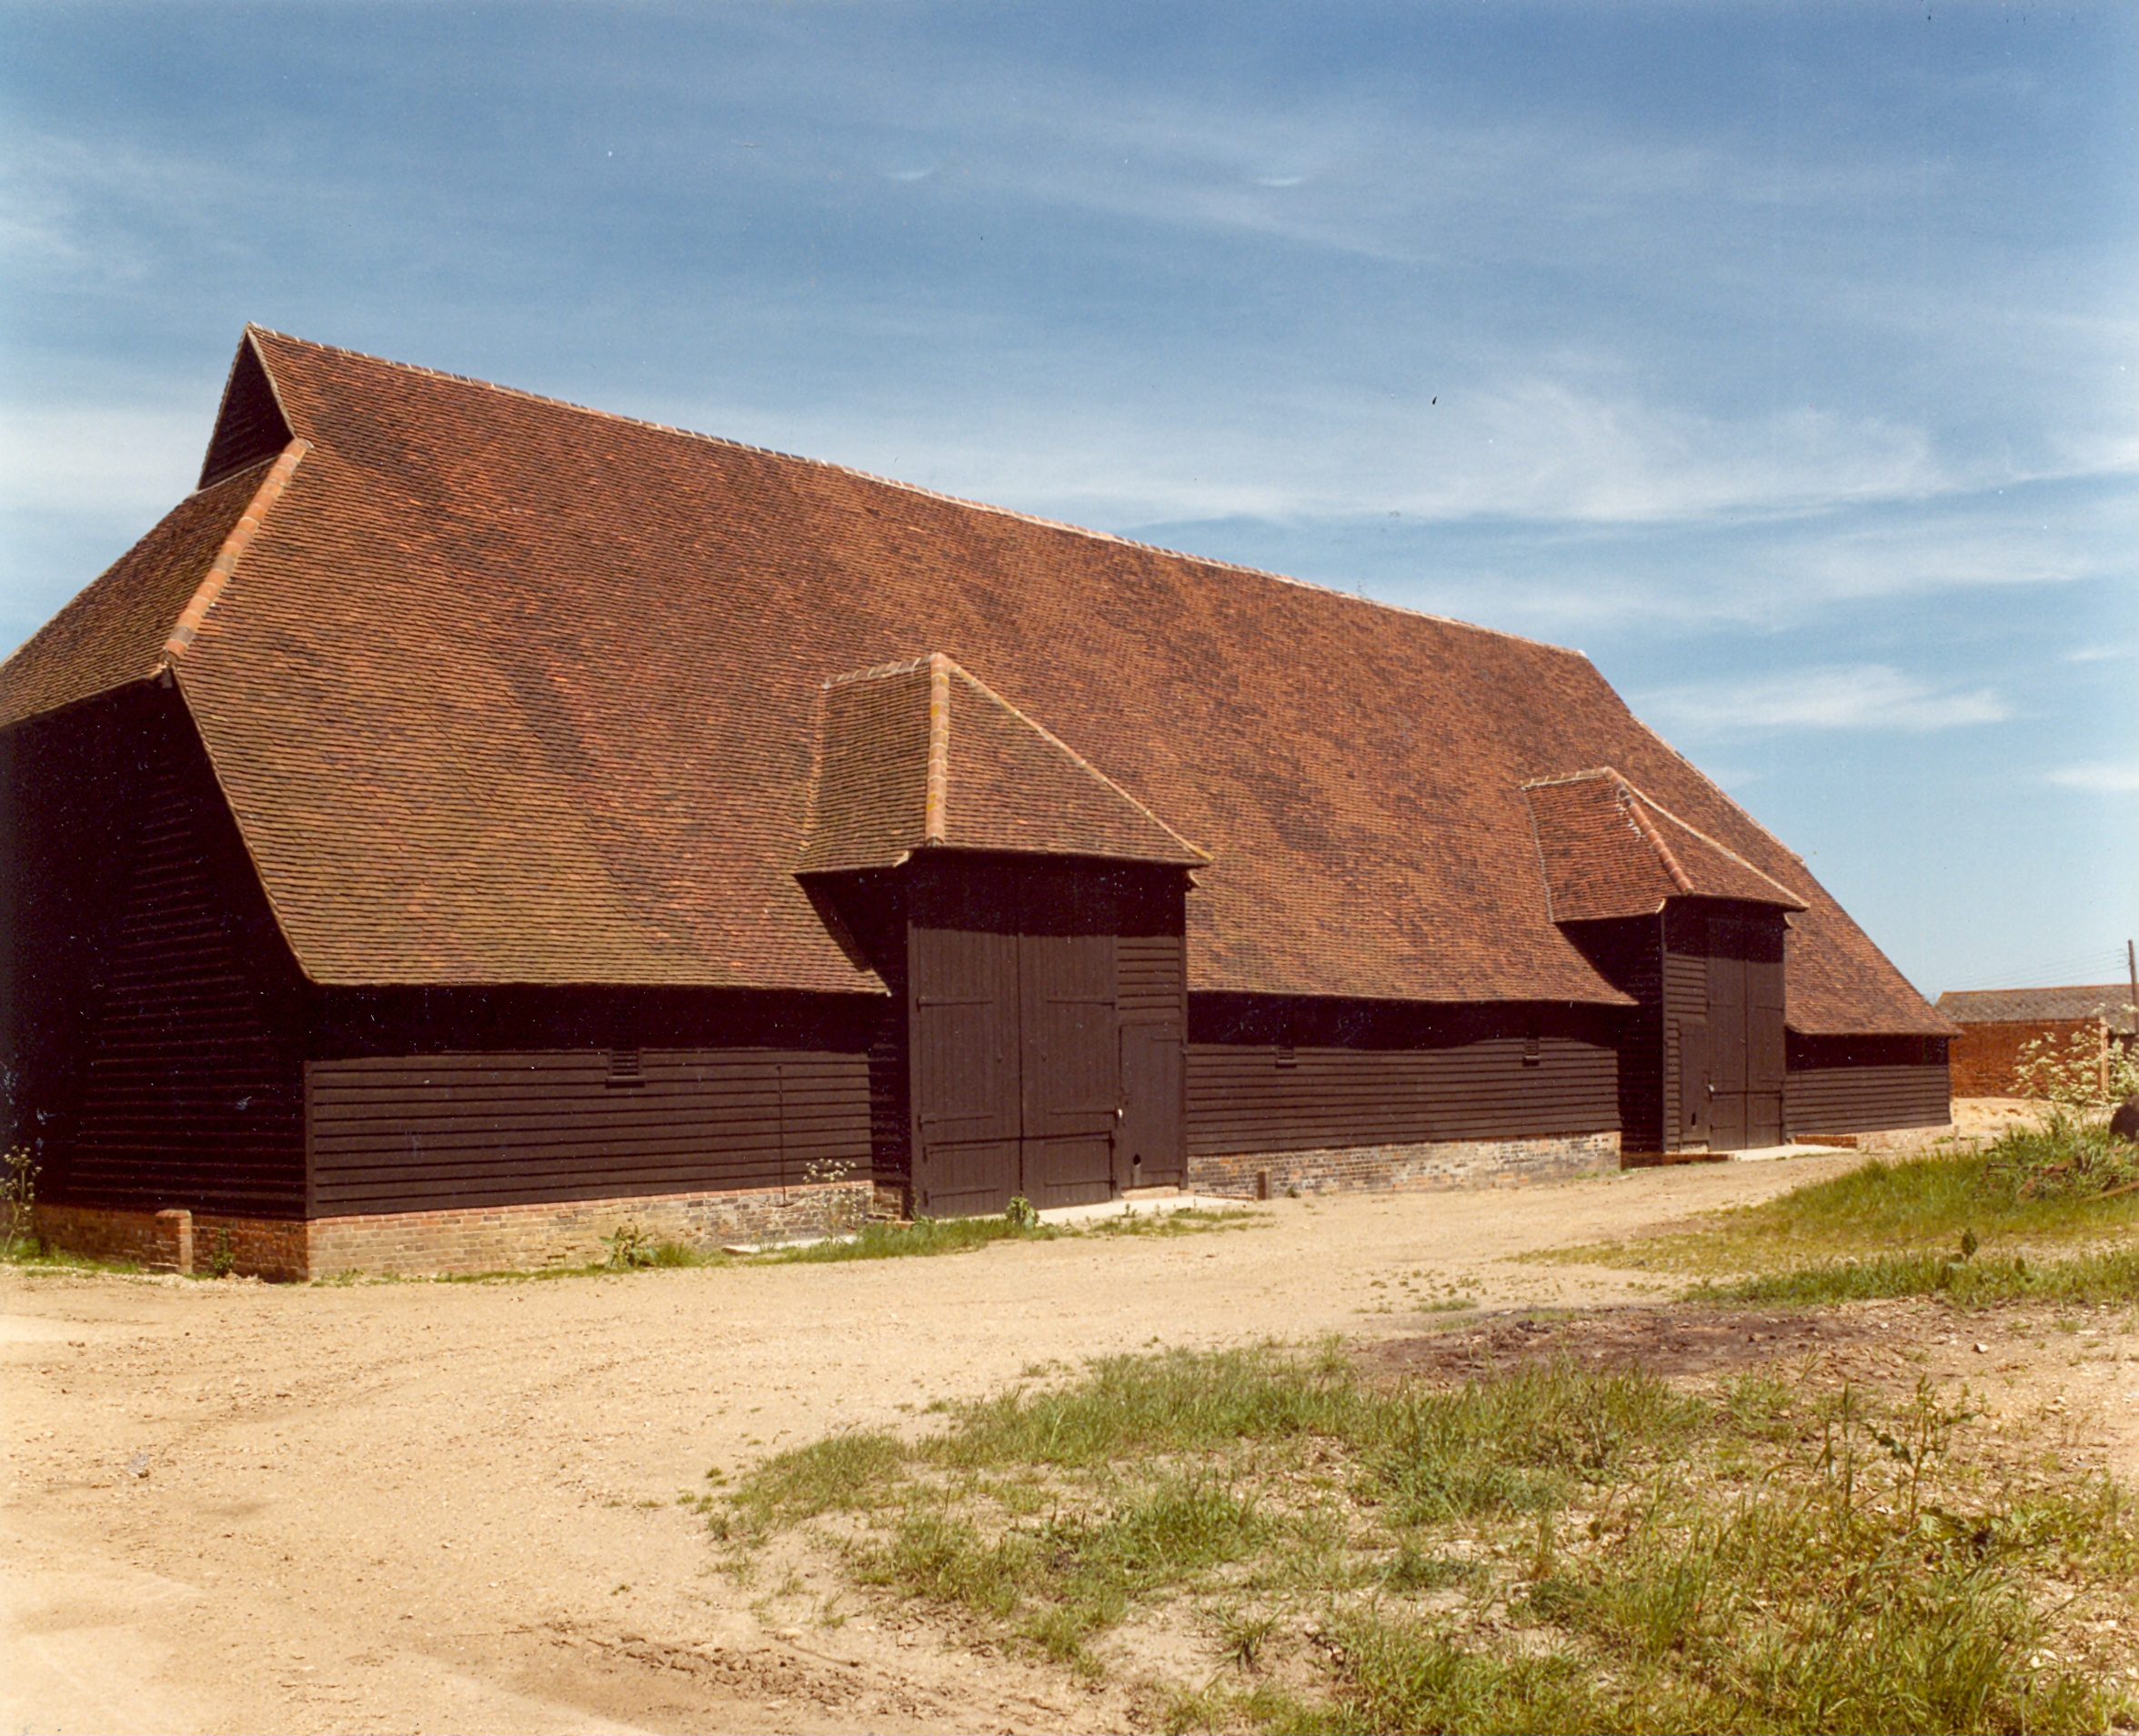 Image 'The Grange Barn, Coggeshall'